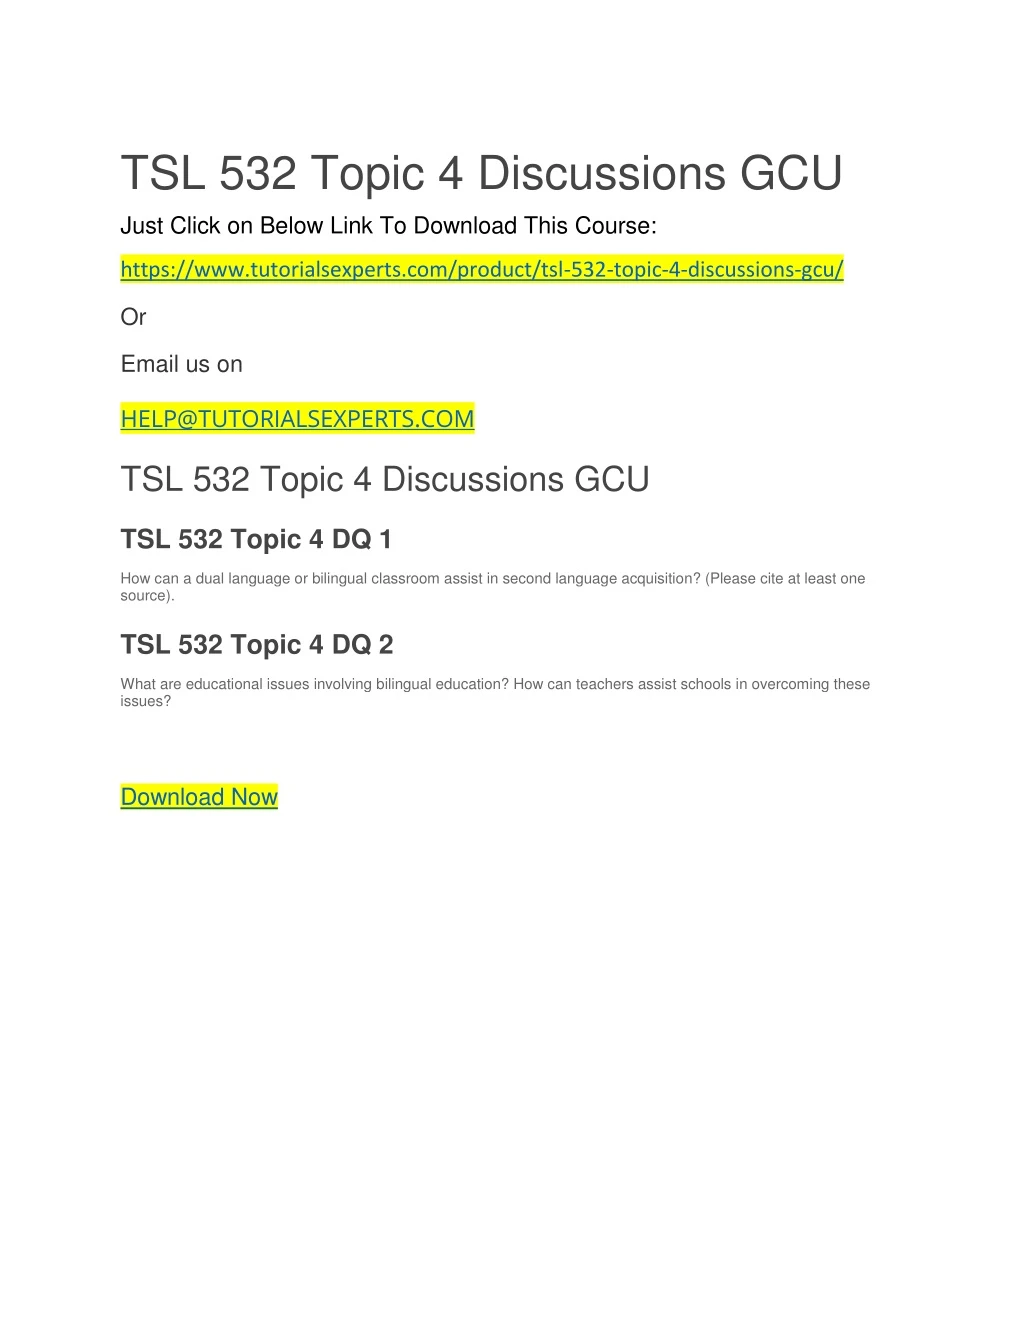 tsl 532 topic 4 discussions gcu just click